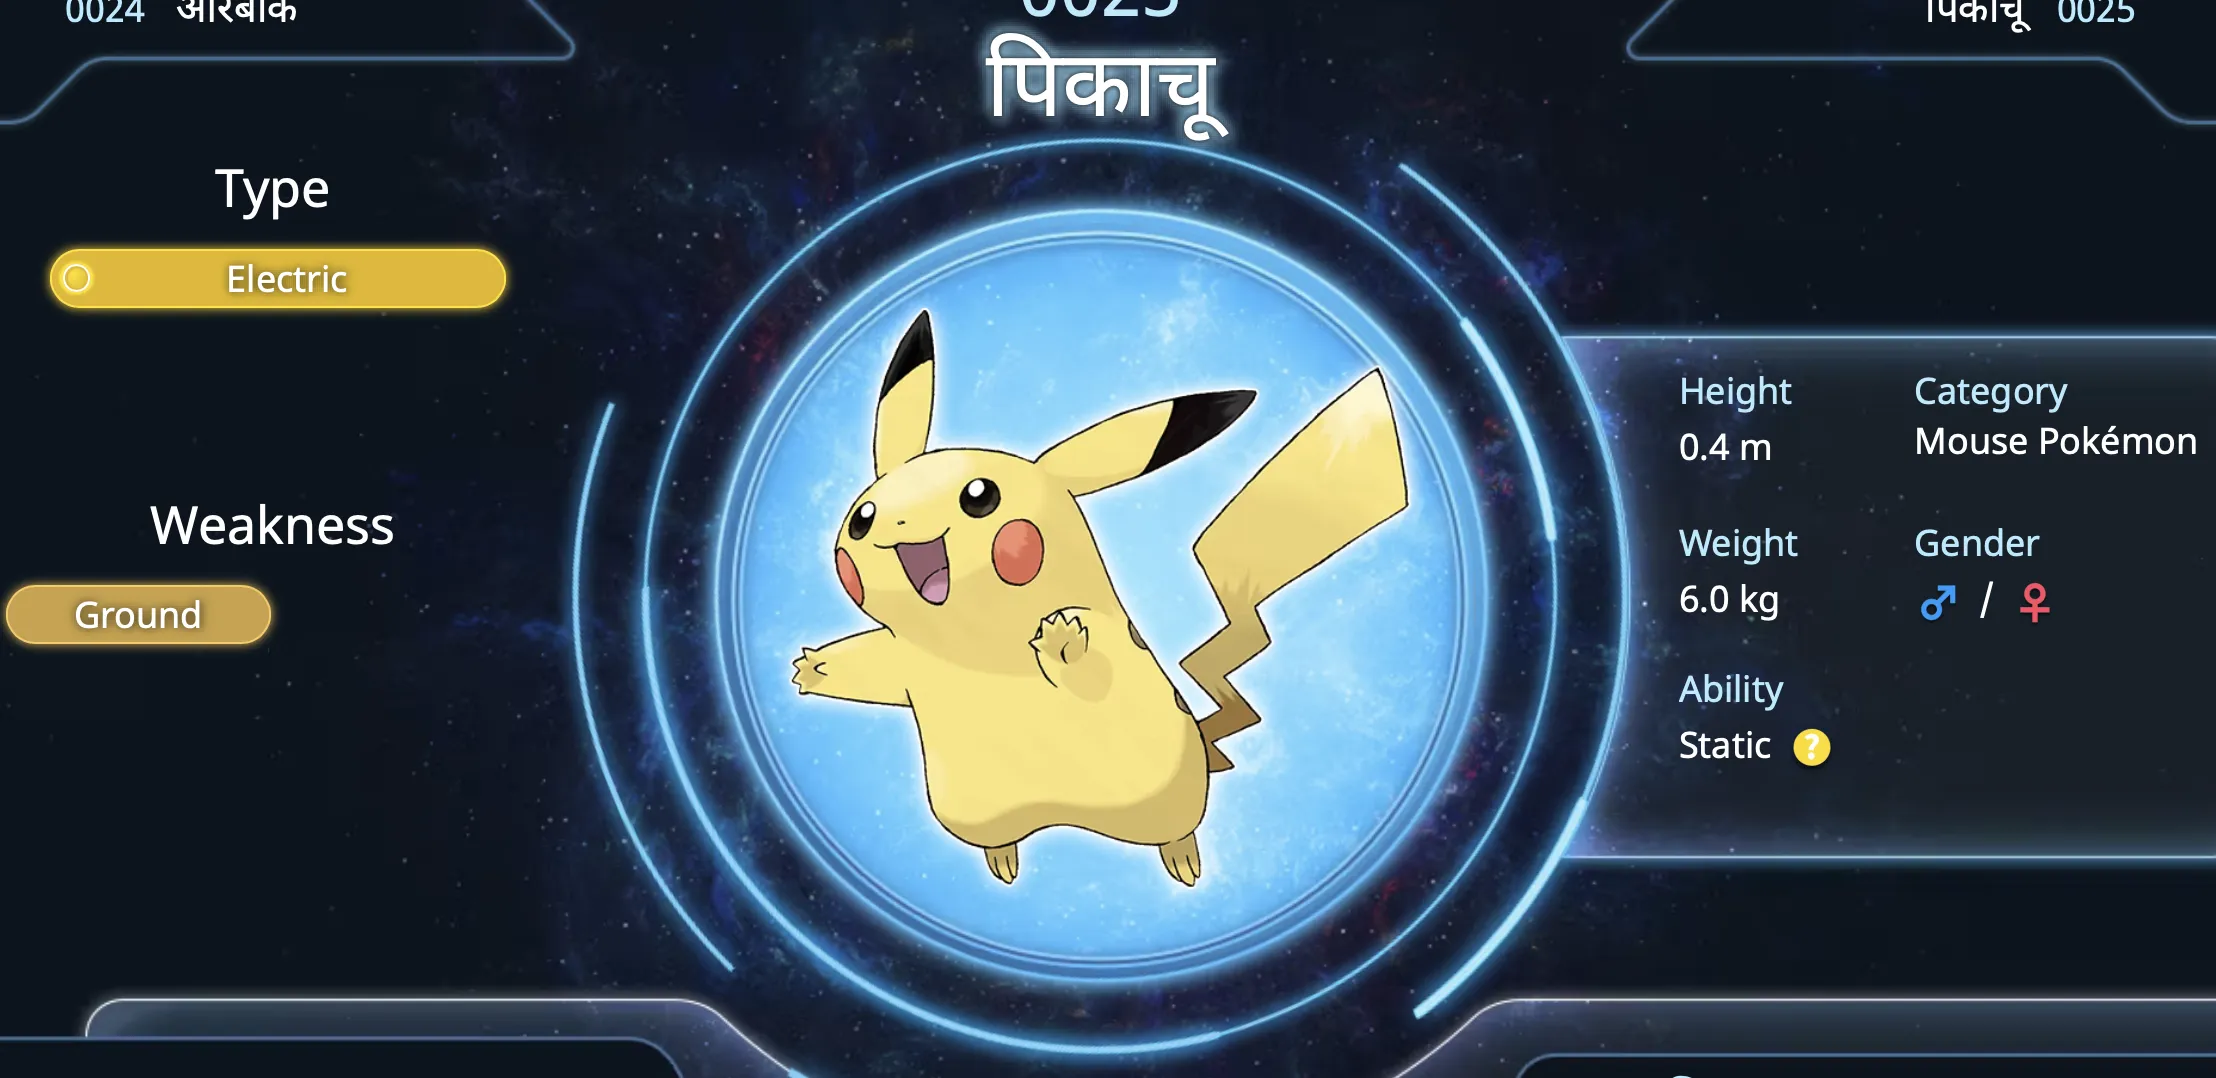 Pikachu written in Hindi in the Pokedex.